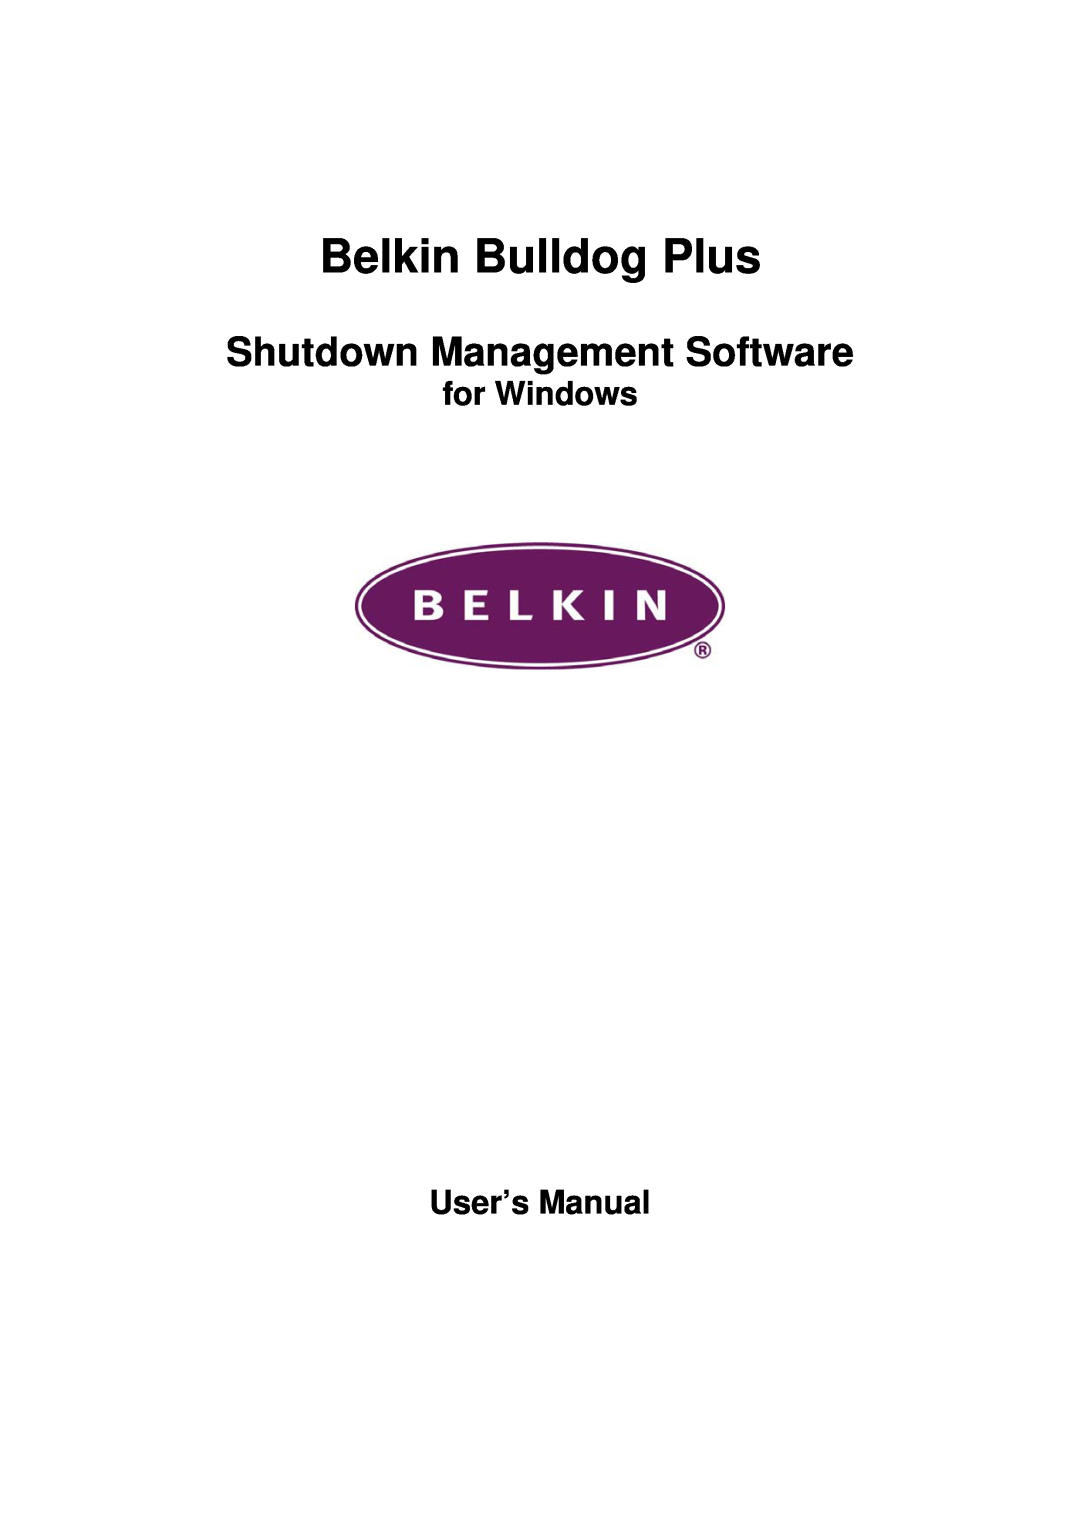 Belkin belkin bulldog plus- shutdown management software for windows user manual Belkin Bulldog Plus 